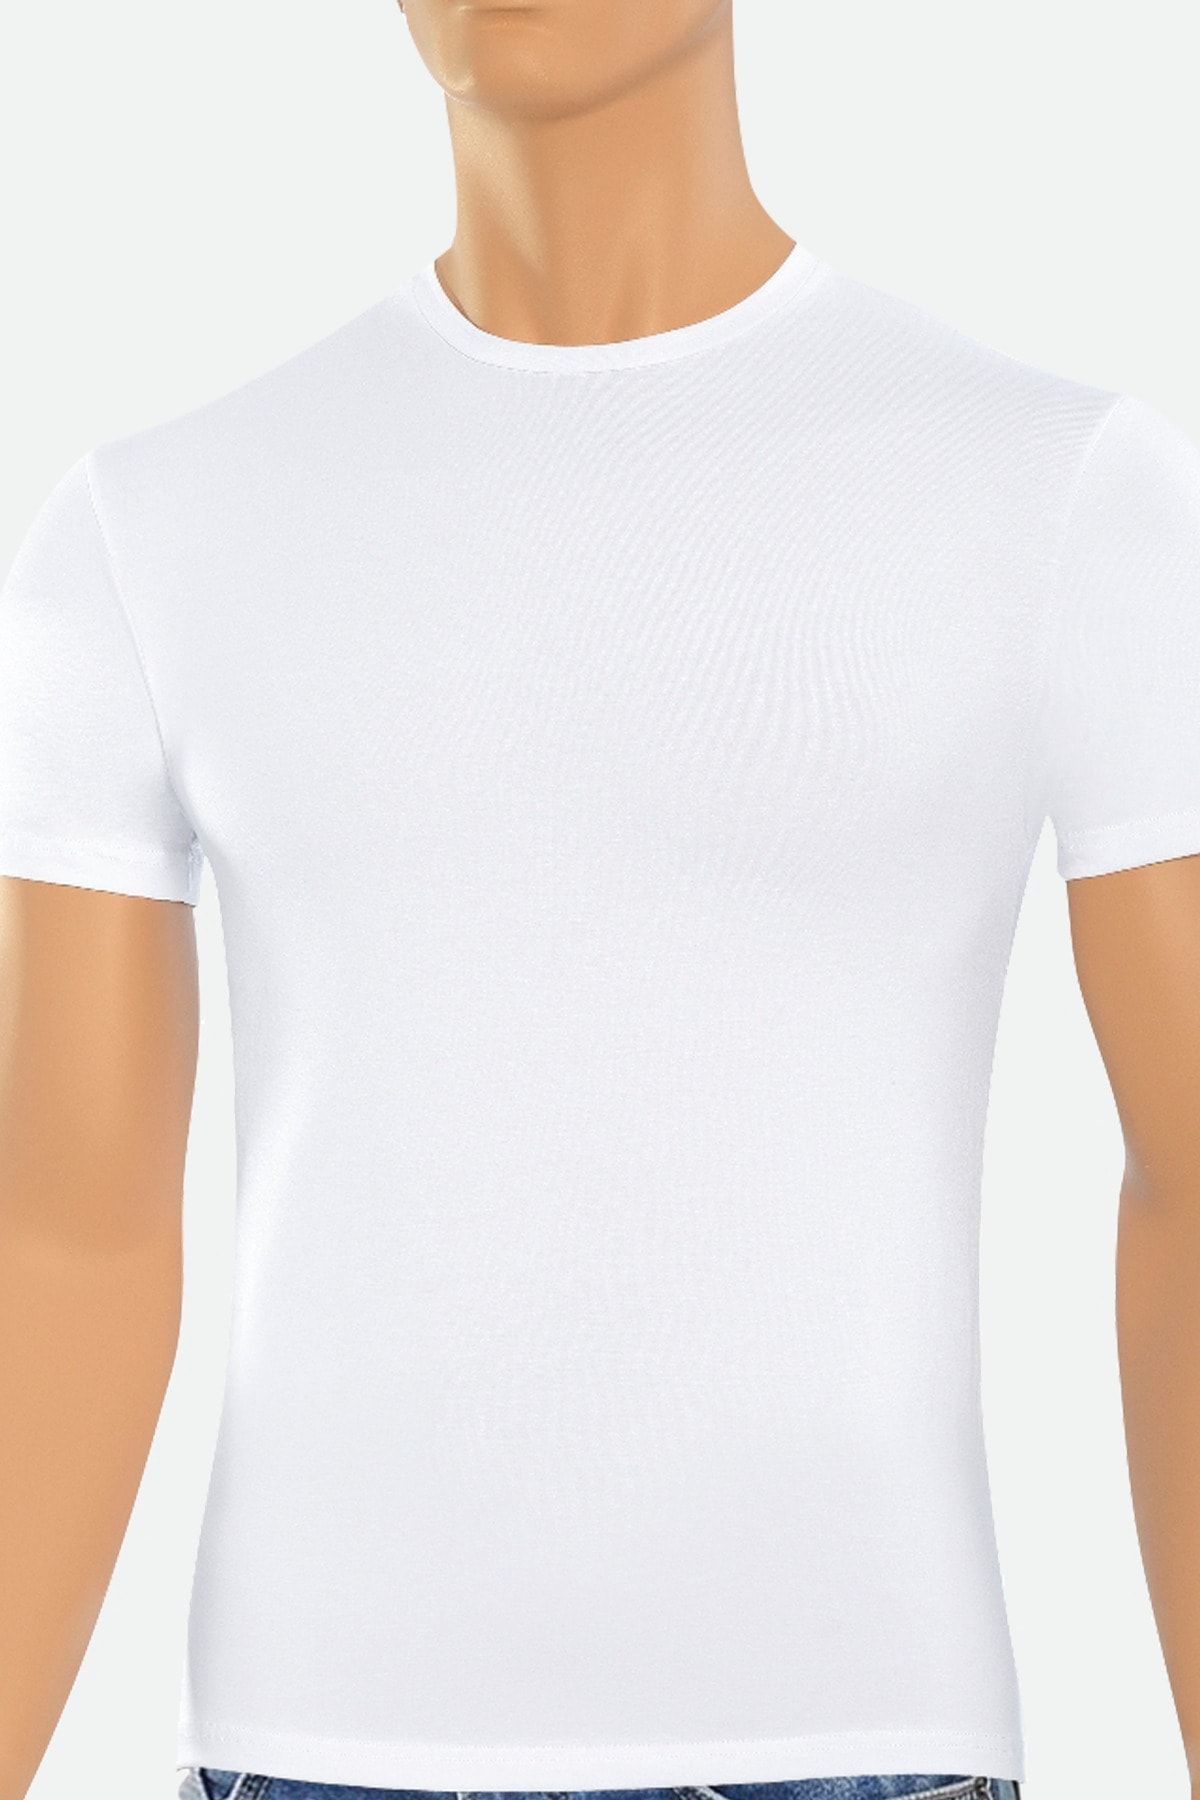 Öts 2'li Erkek Modal Kapalı Yaka T-shirt Beyaz